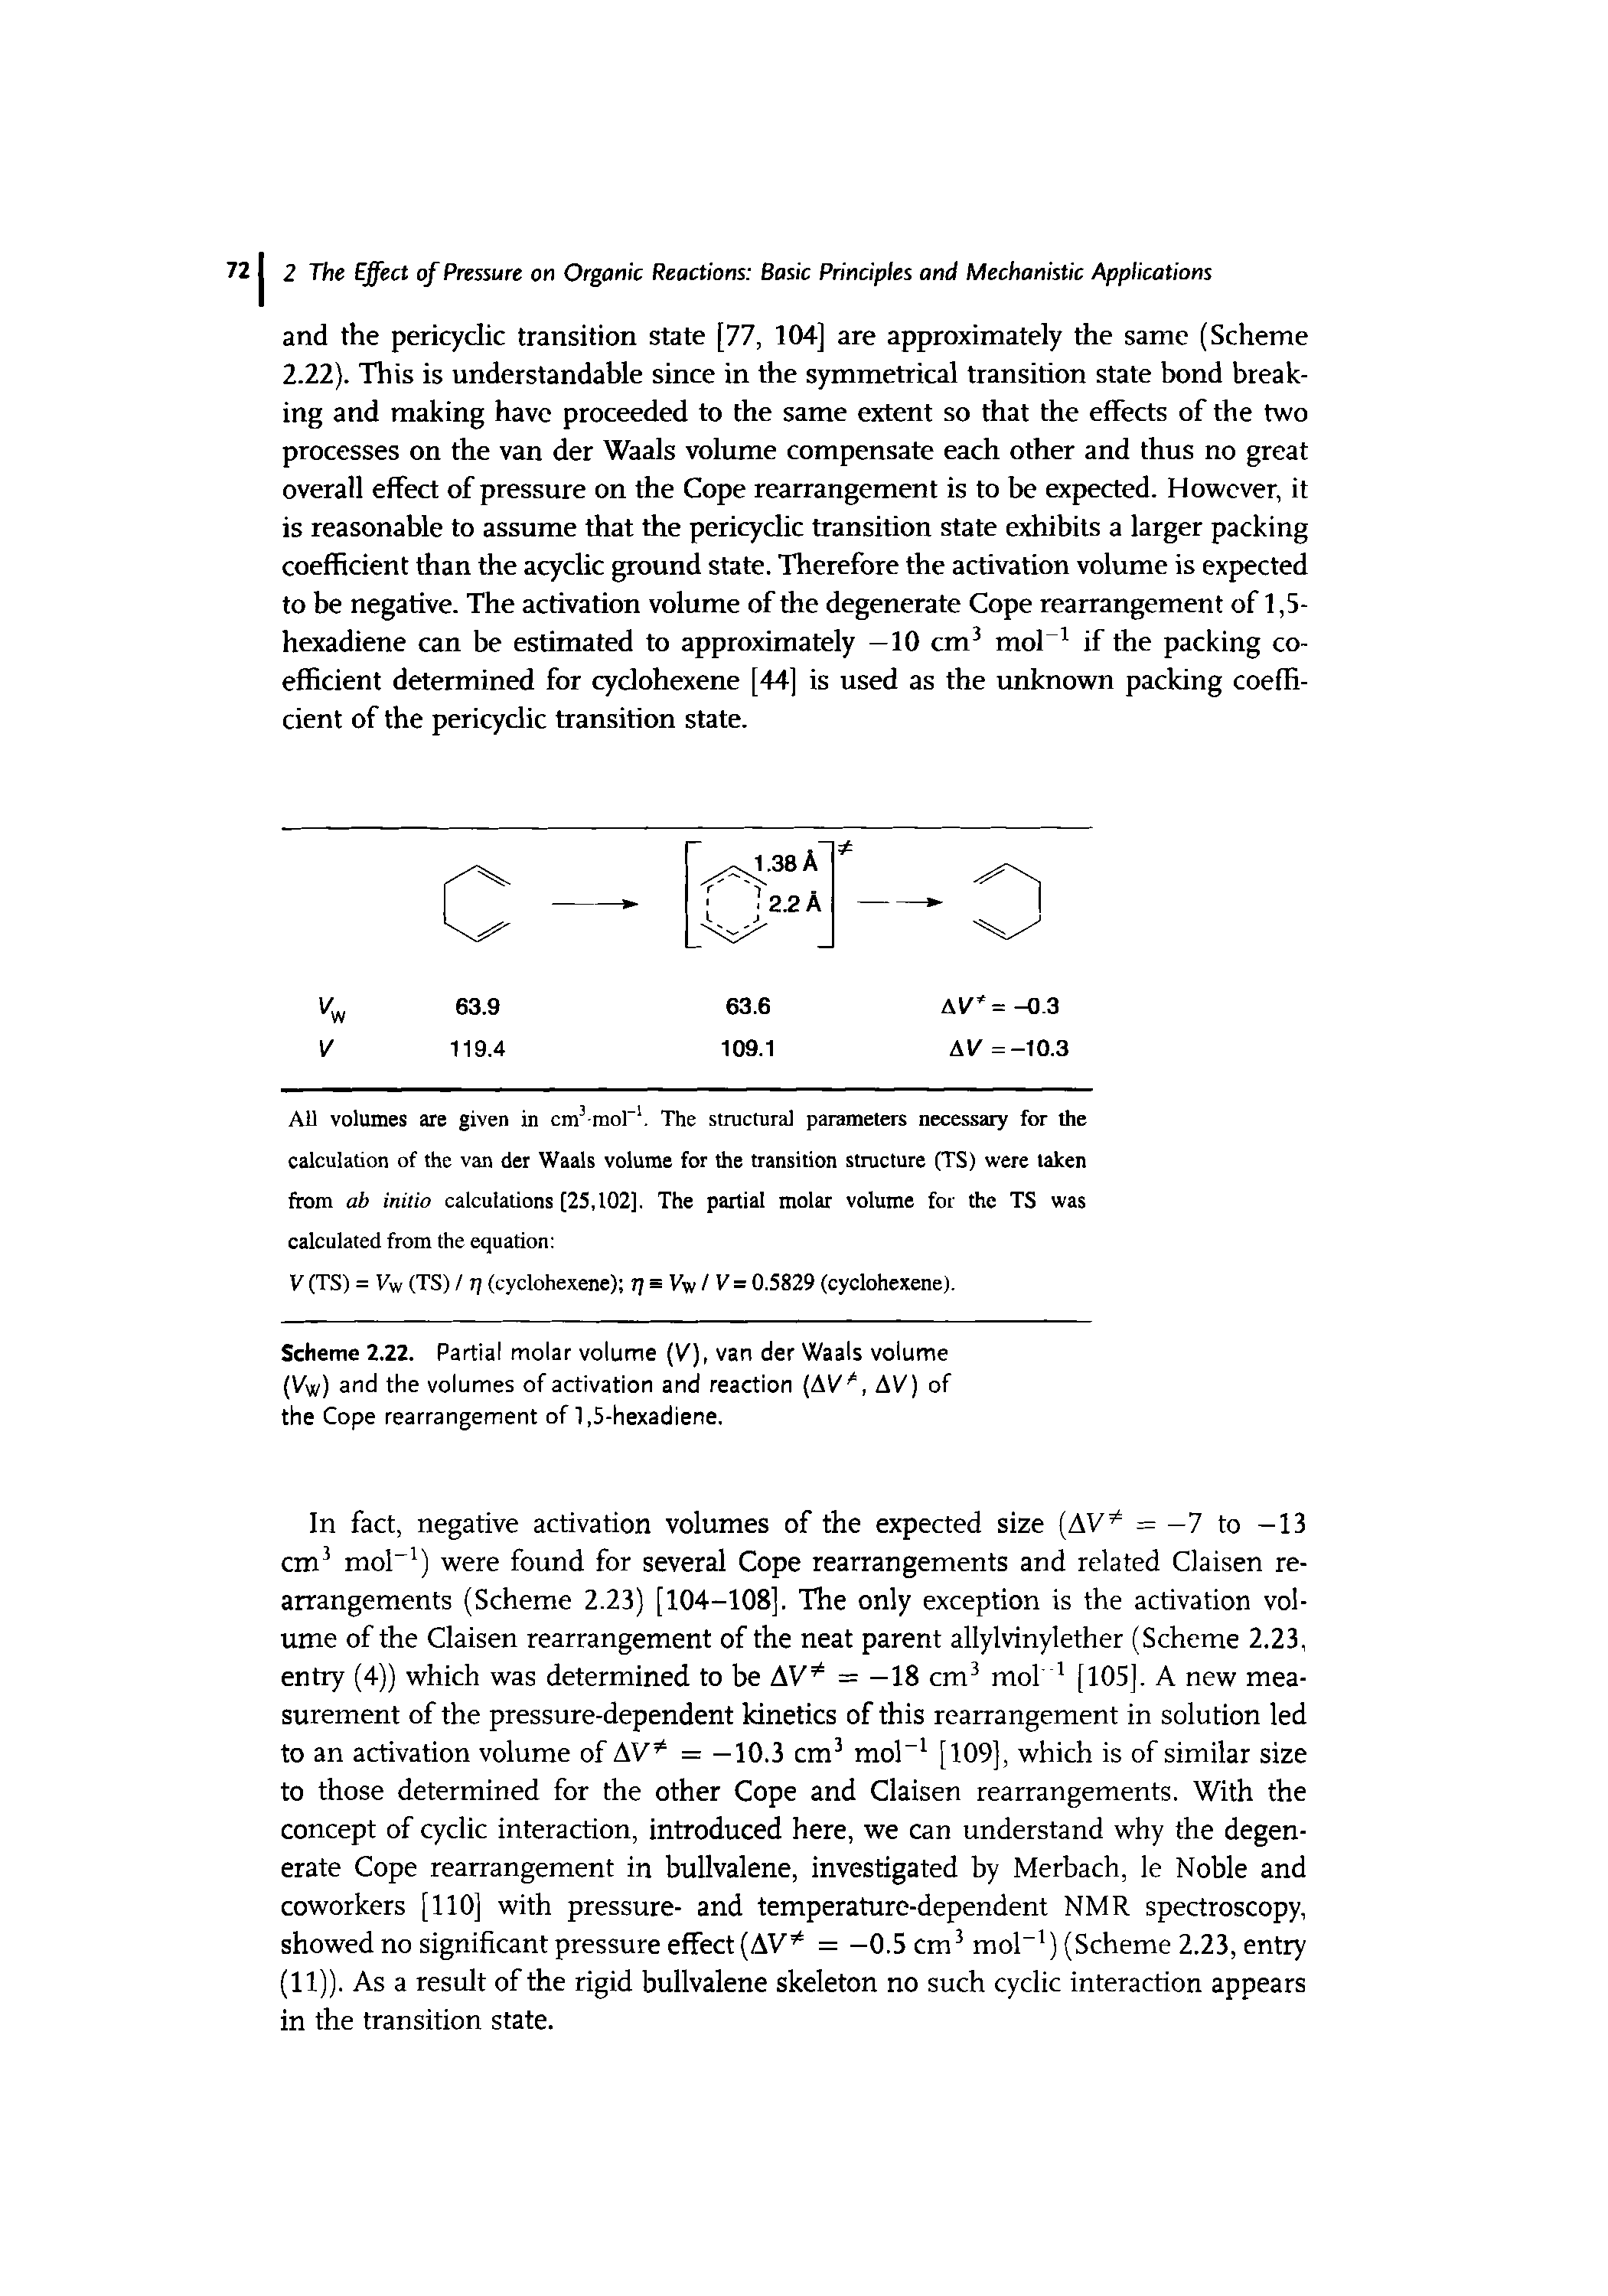 Scheme 2.22. Partial molar volume [V], van der Waals volume (Vw) and the volumes of activation and reaction AV, AV) of the Cope rearrangement of 1,5-hexadiene.